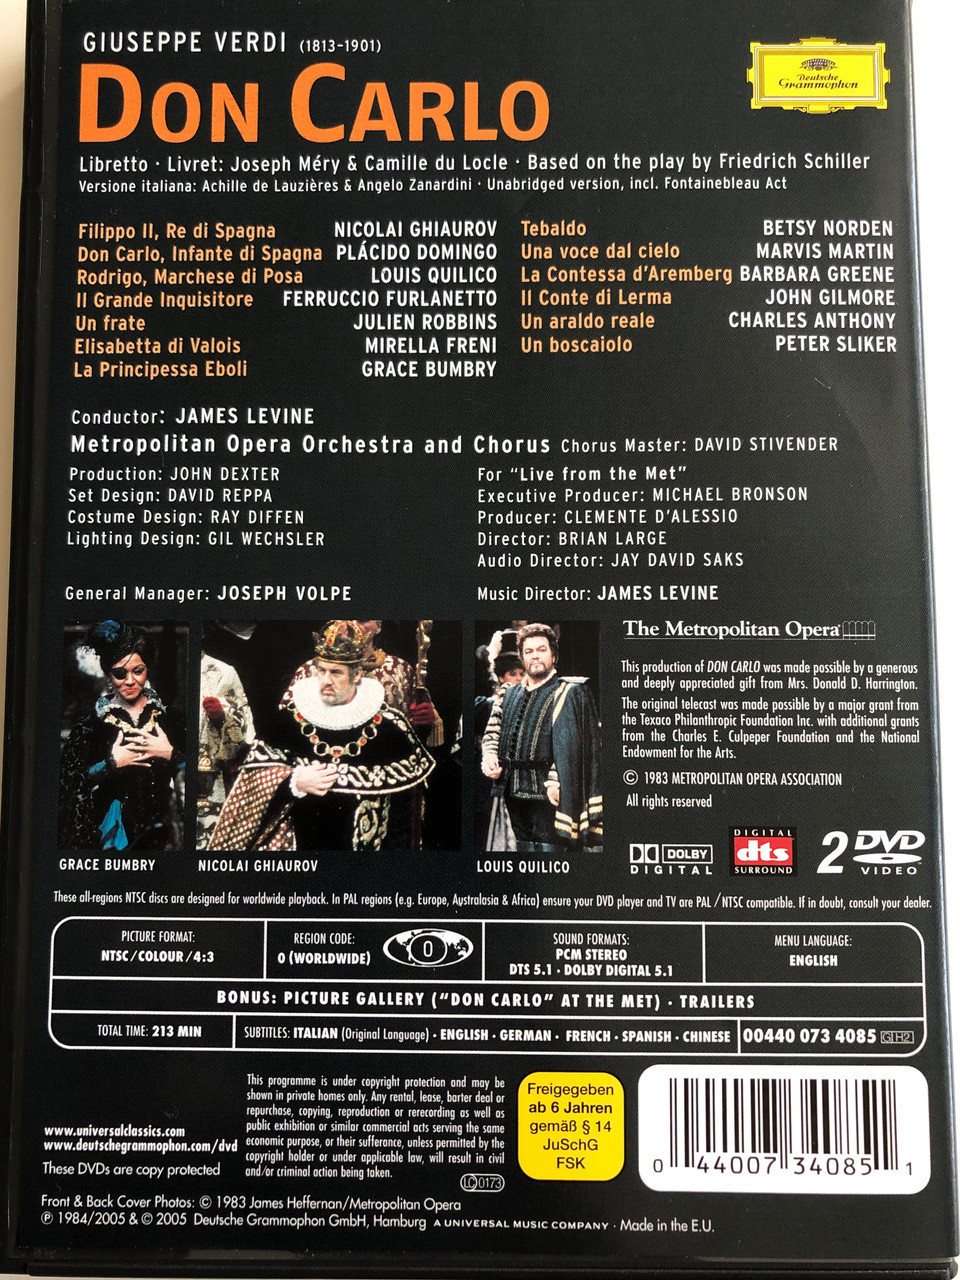 Verdi - Don Carlo DVD 2005 / Plácido Domingo, Mirella Freni / Directed by  Brian Large / Metropolitan Opera Orchestra and Chorus / Conducted by James  Levine / 2 DVD - bibleinmylanguage